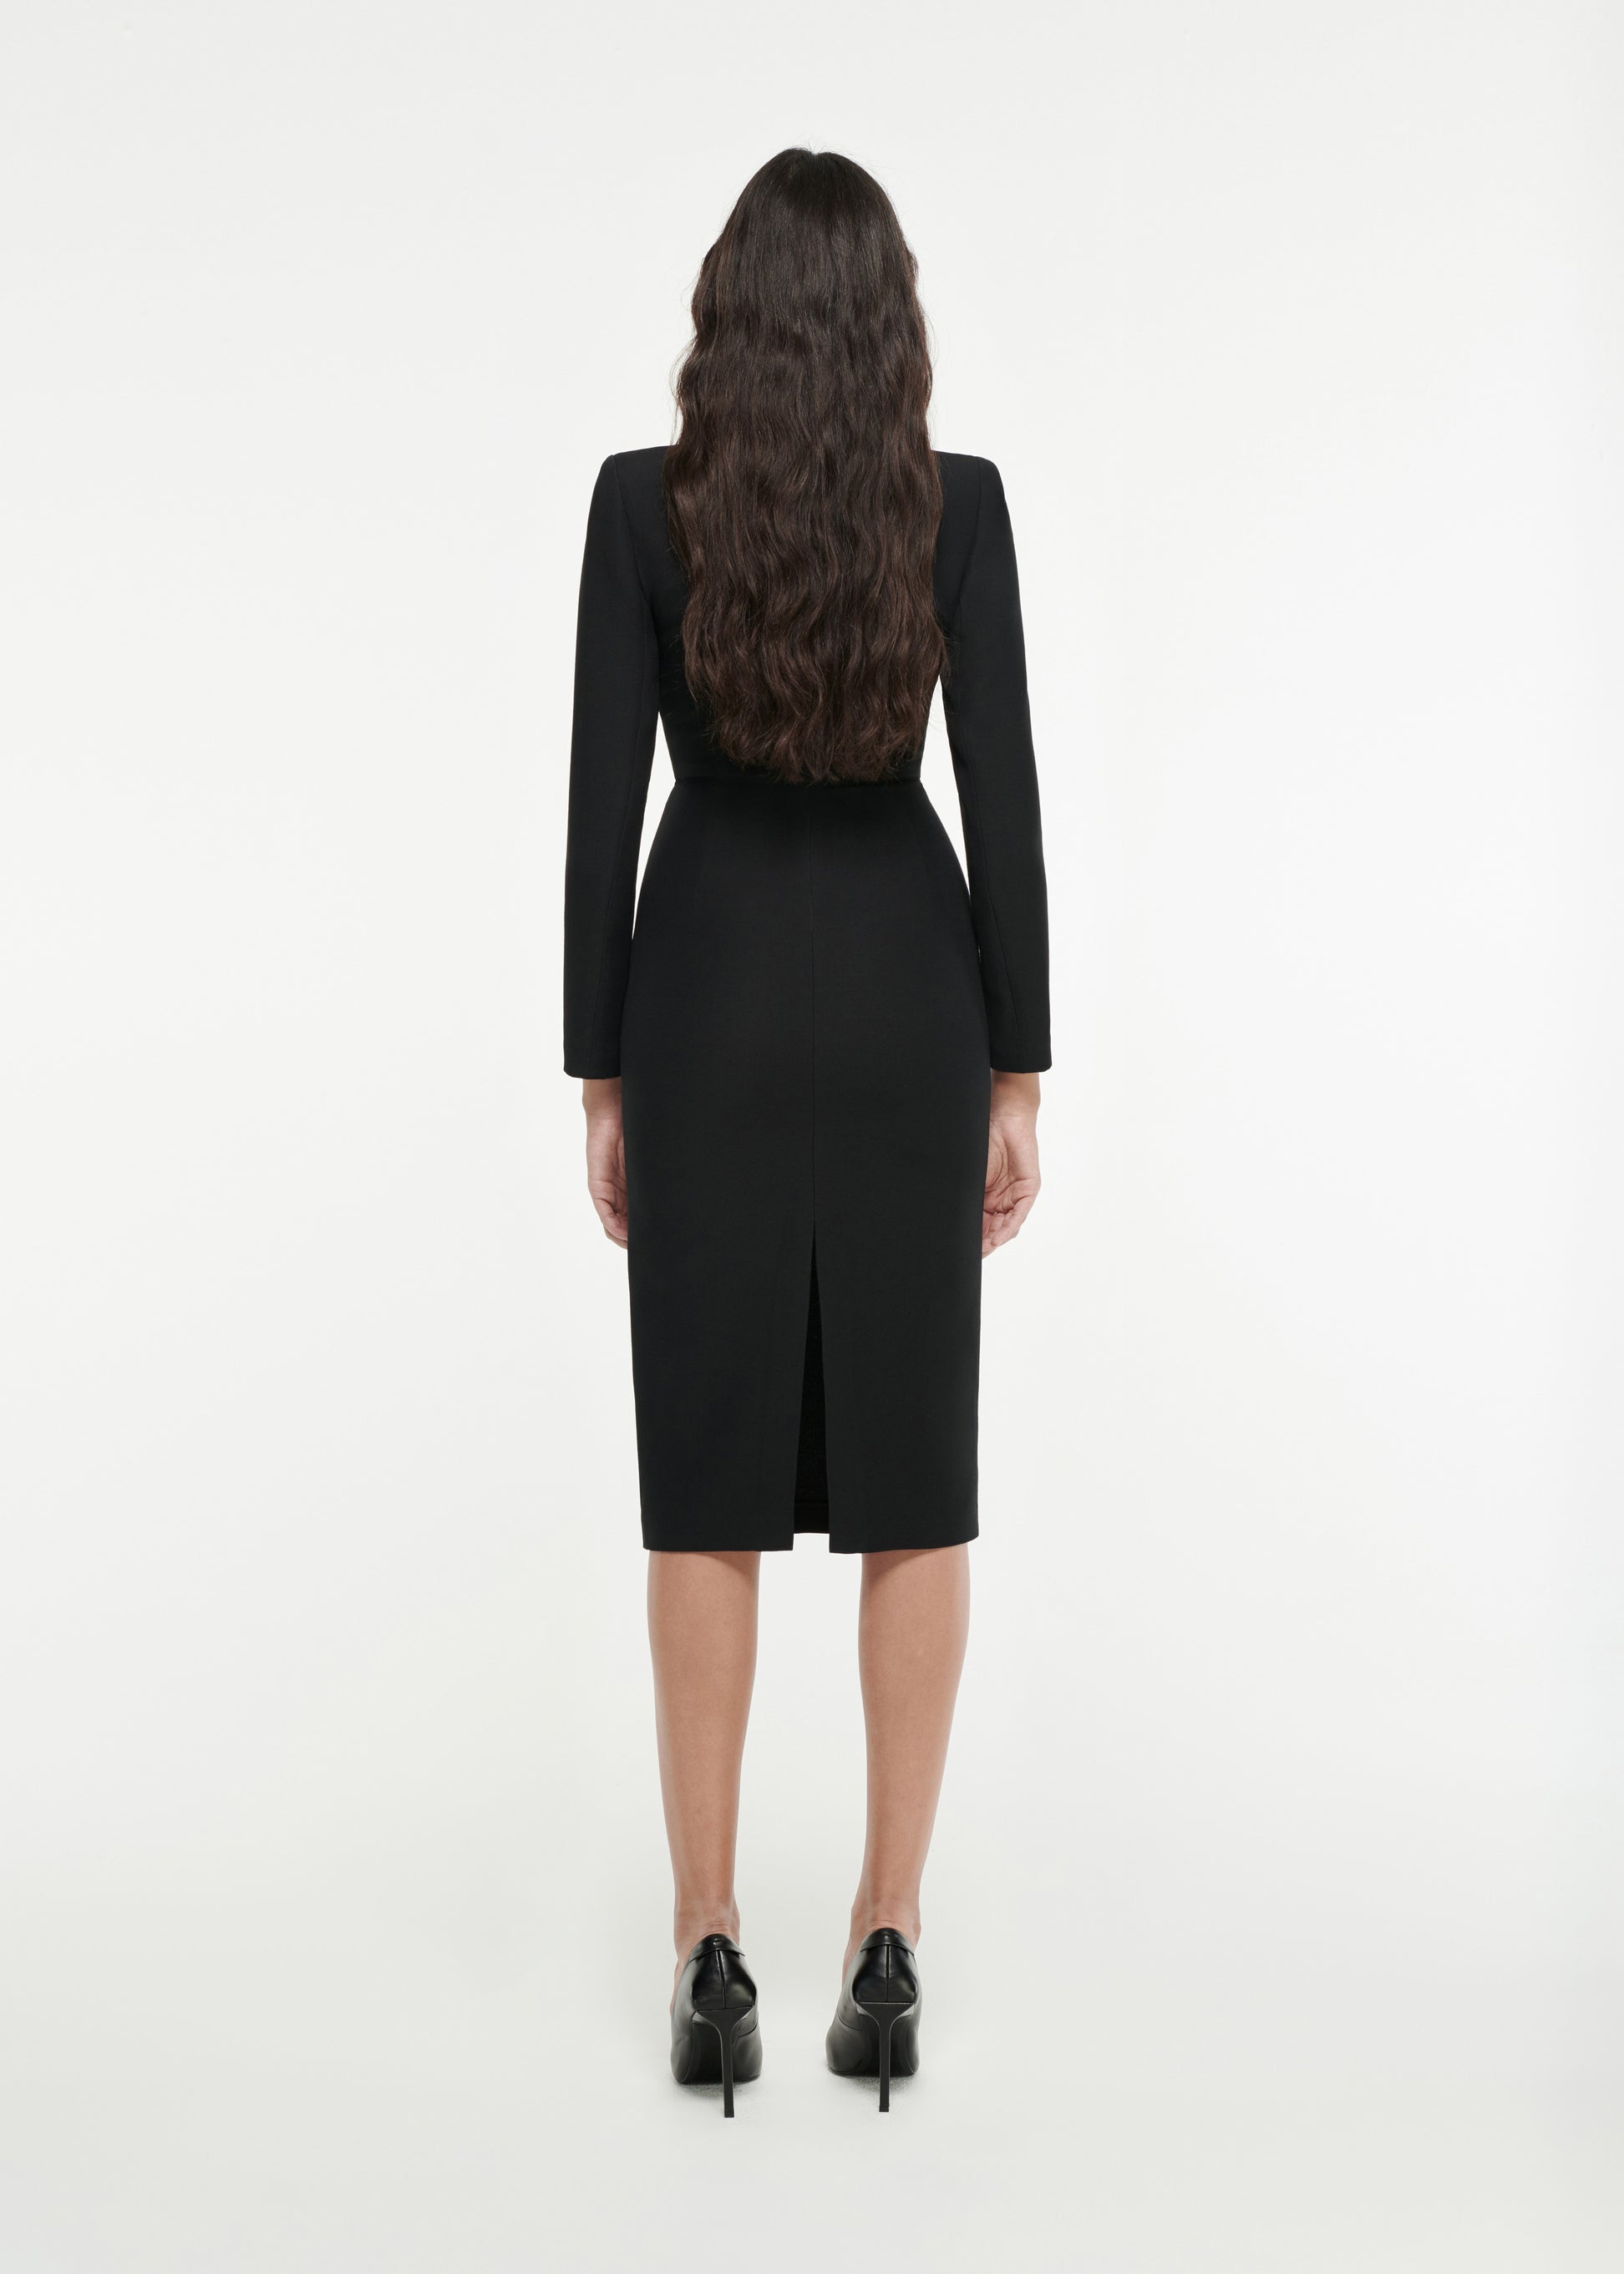 The back of a woman wearing the Long Sleeve Silk Wool Midi Dress in Black